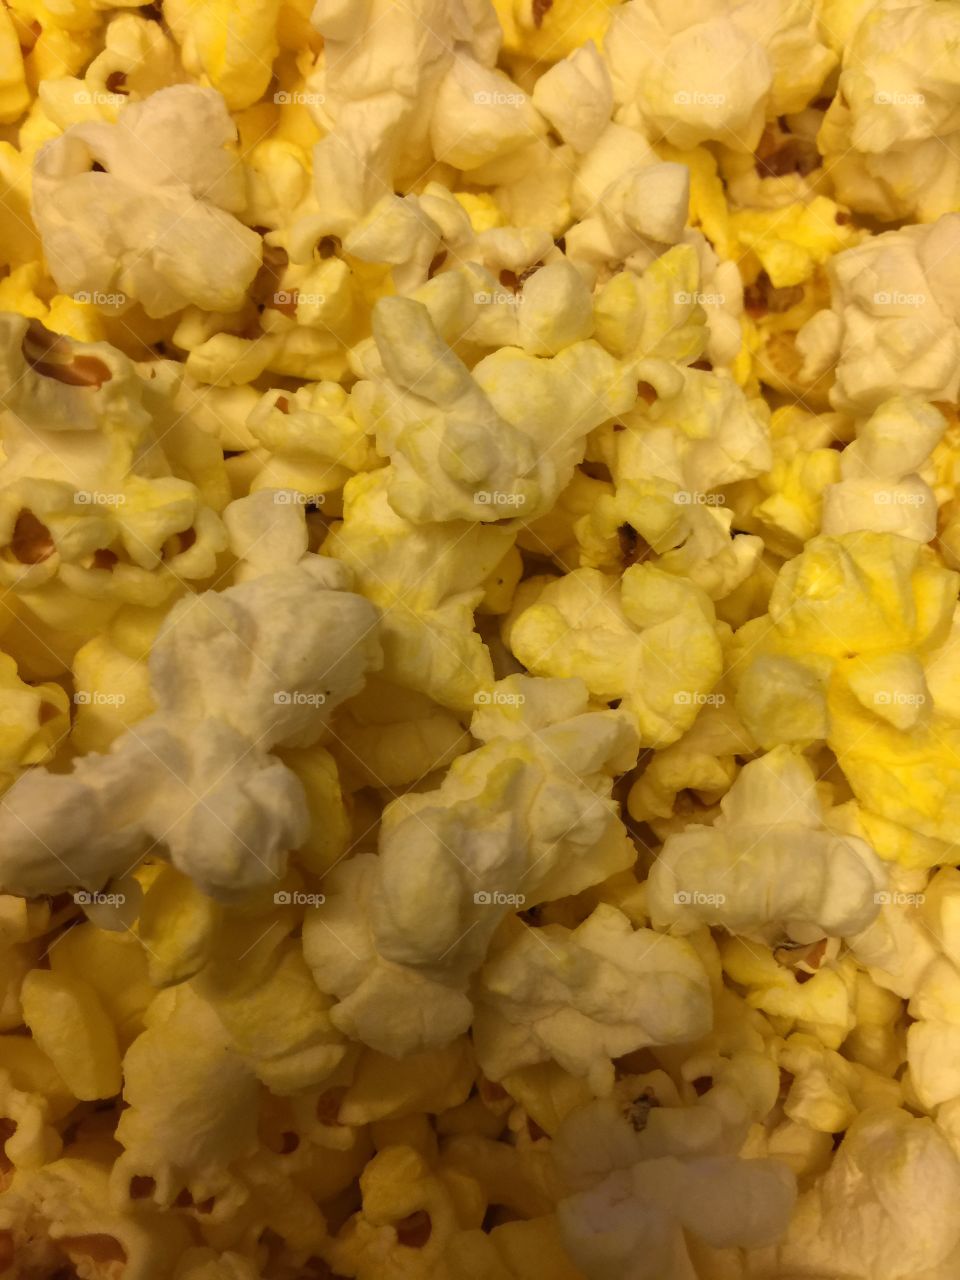 Yummy
Popcorn